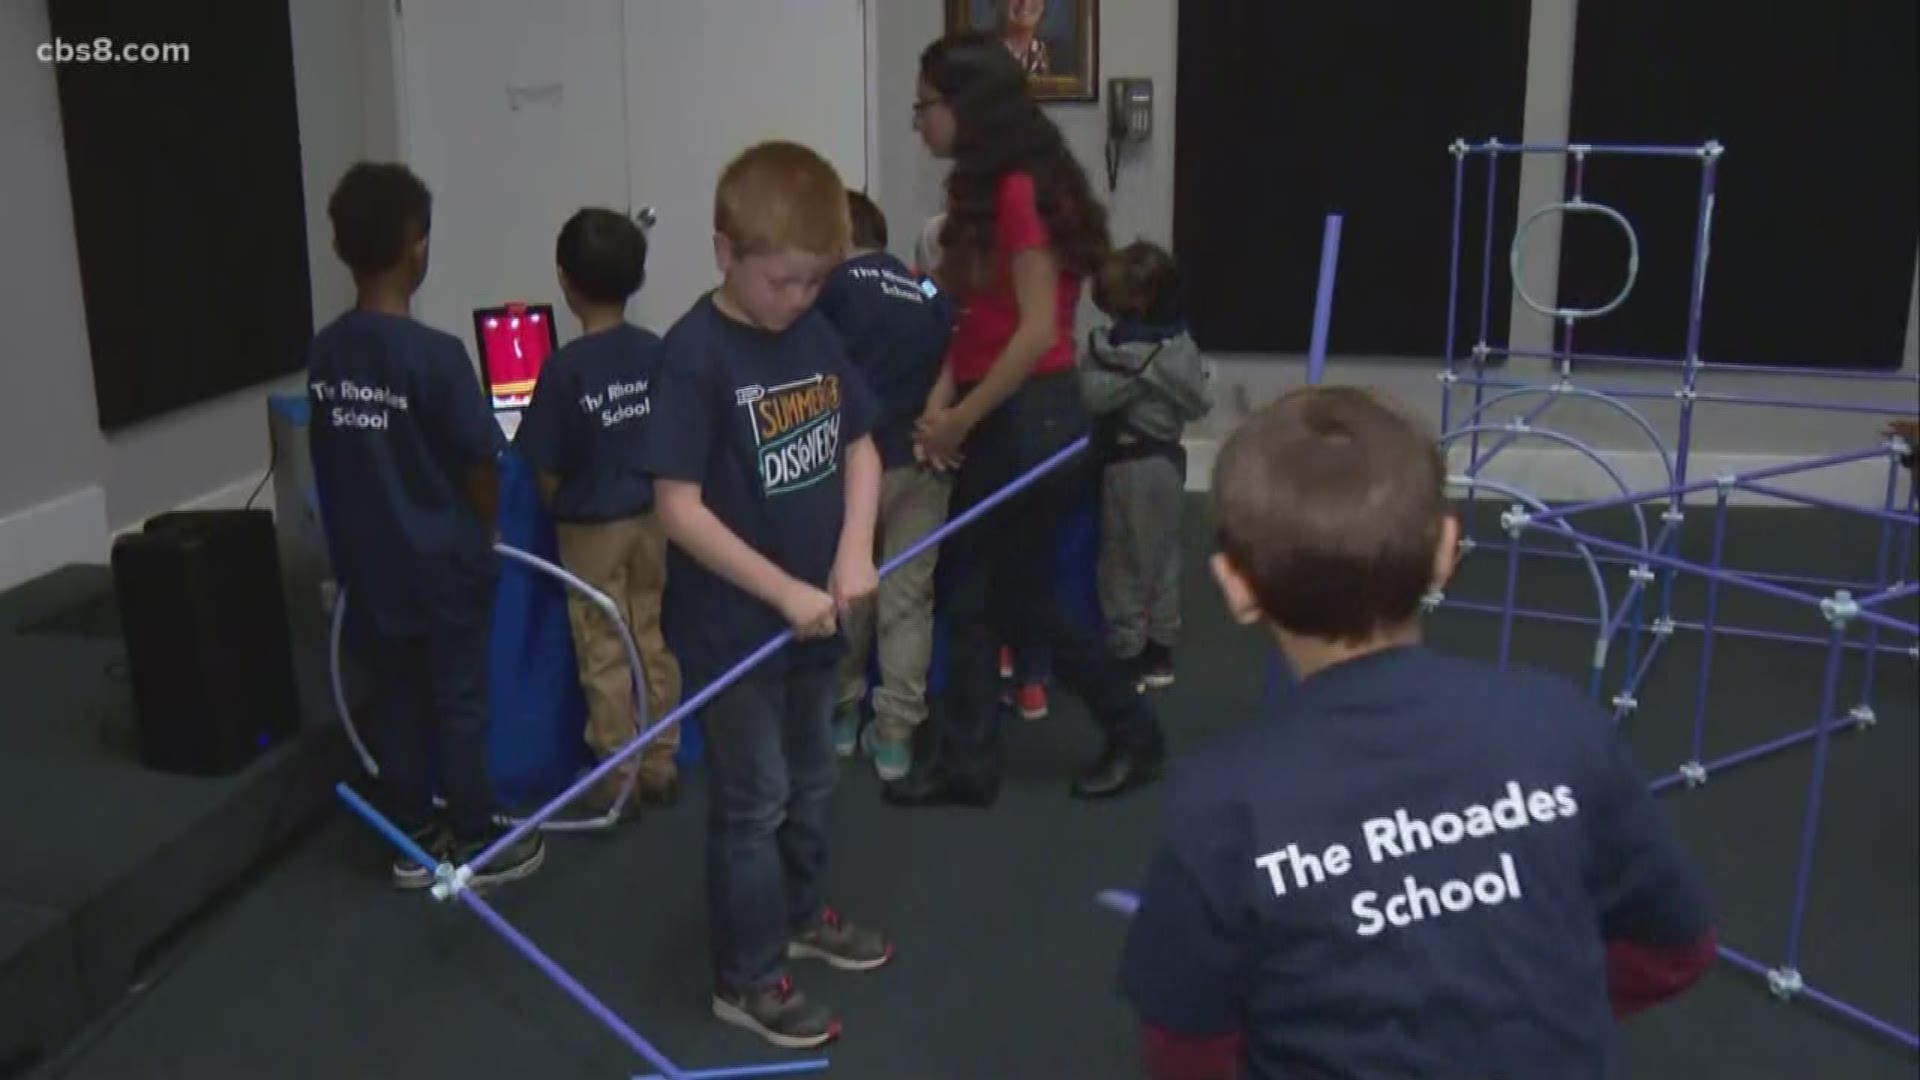 Kids at The Rhoades School show off their creativity while building bridges